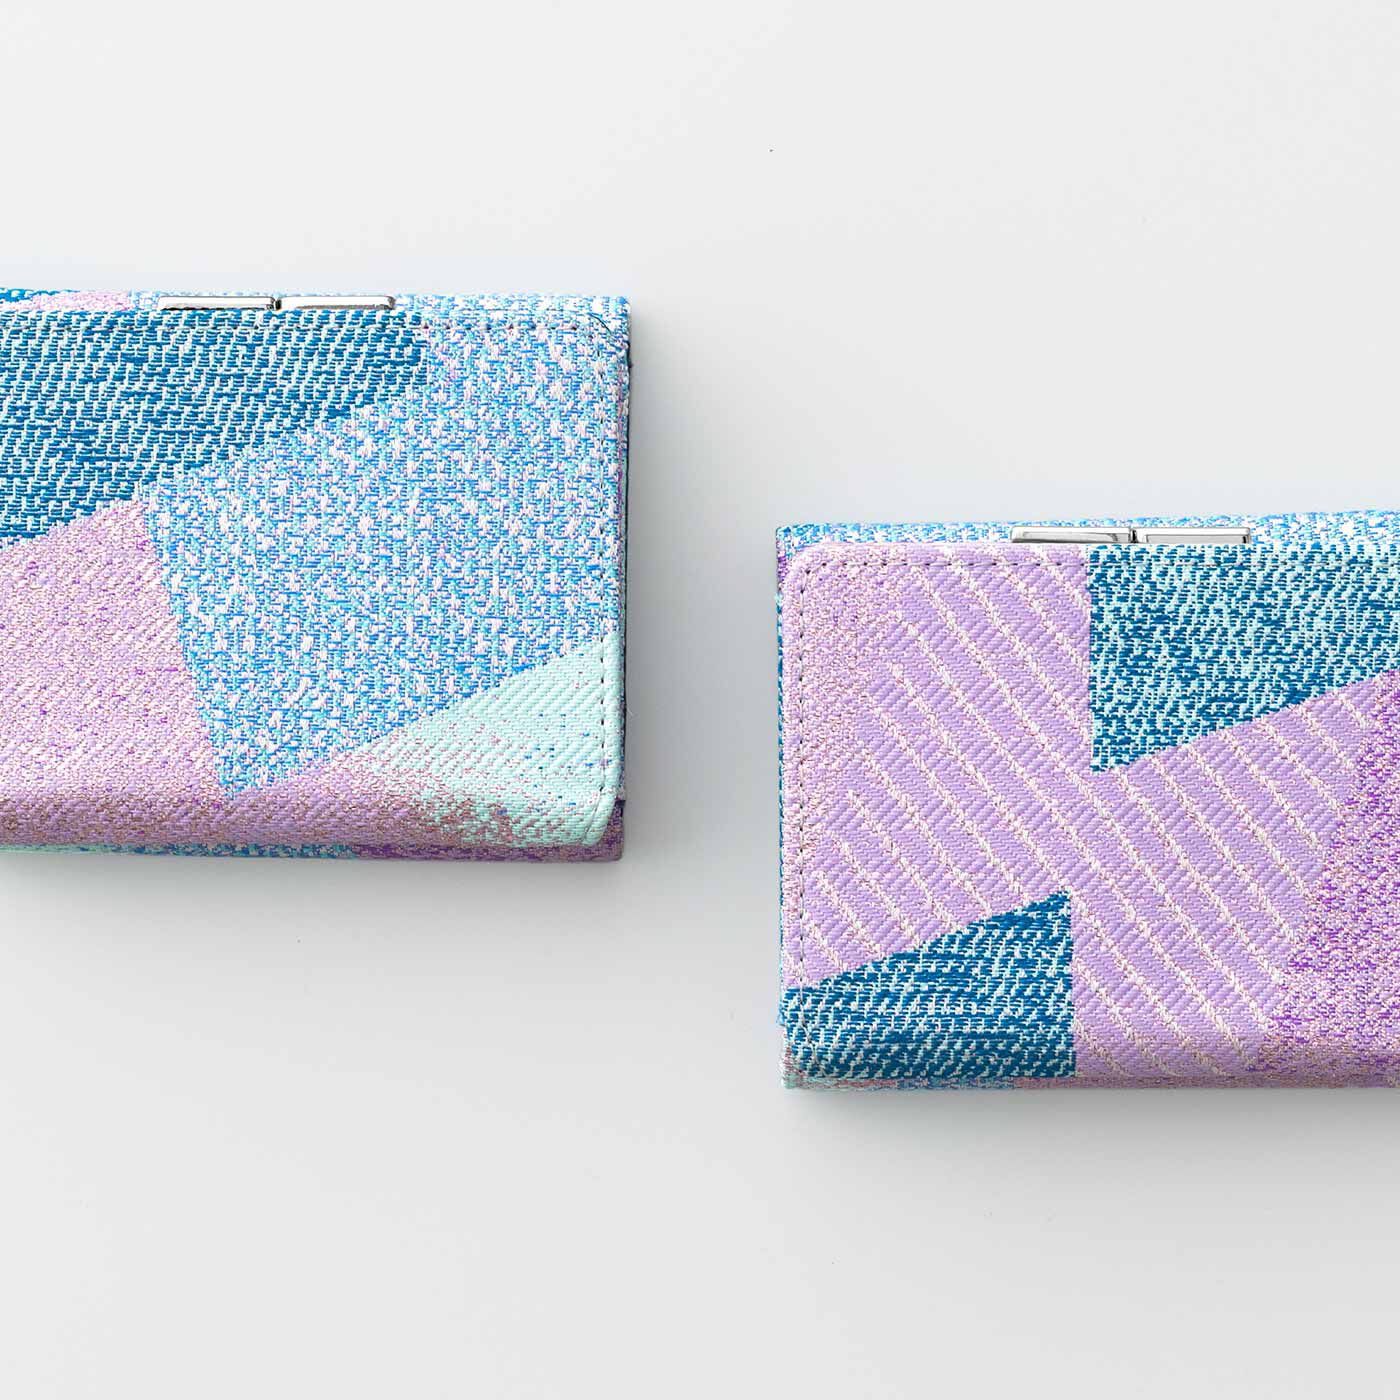 SeeMONO|特別な西陣織の生地で作った 三つ折りがま口ミニ財布|柄の出方はひとつひとつ個性があります。